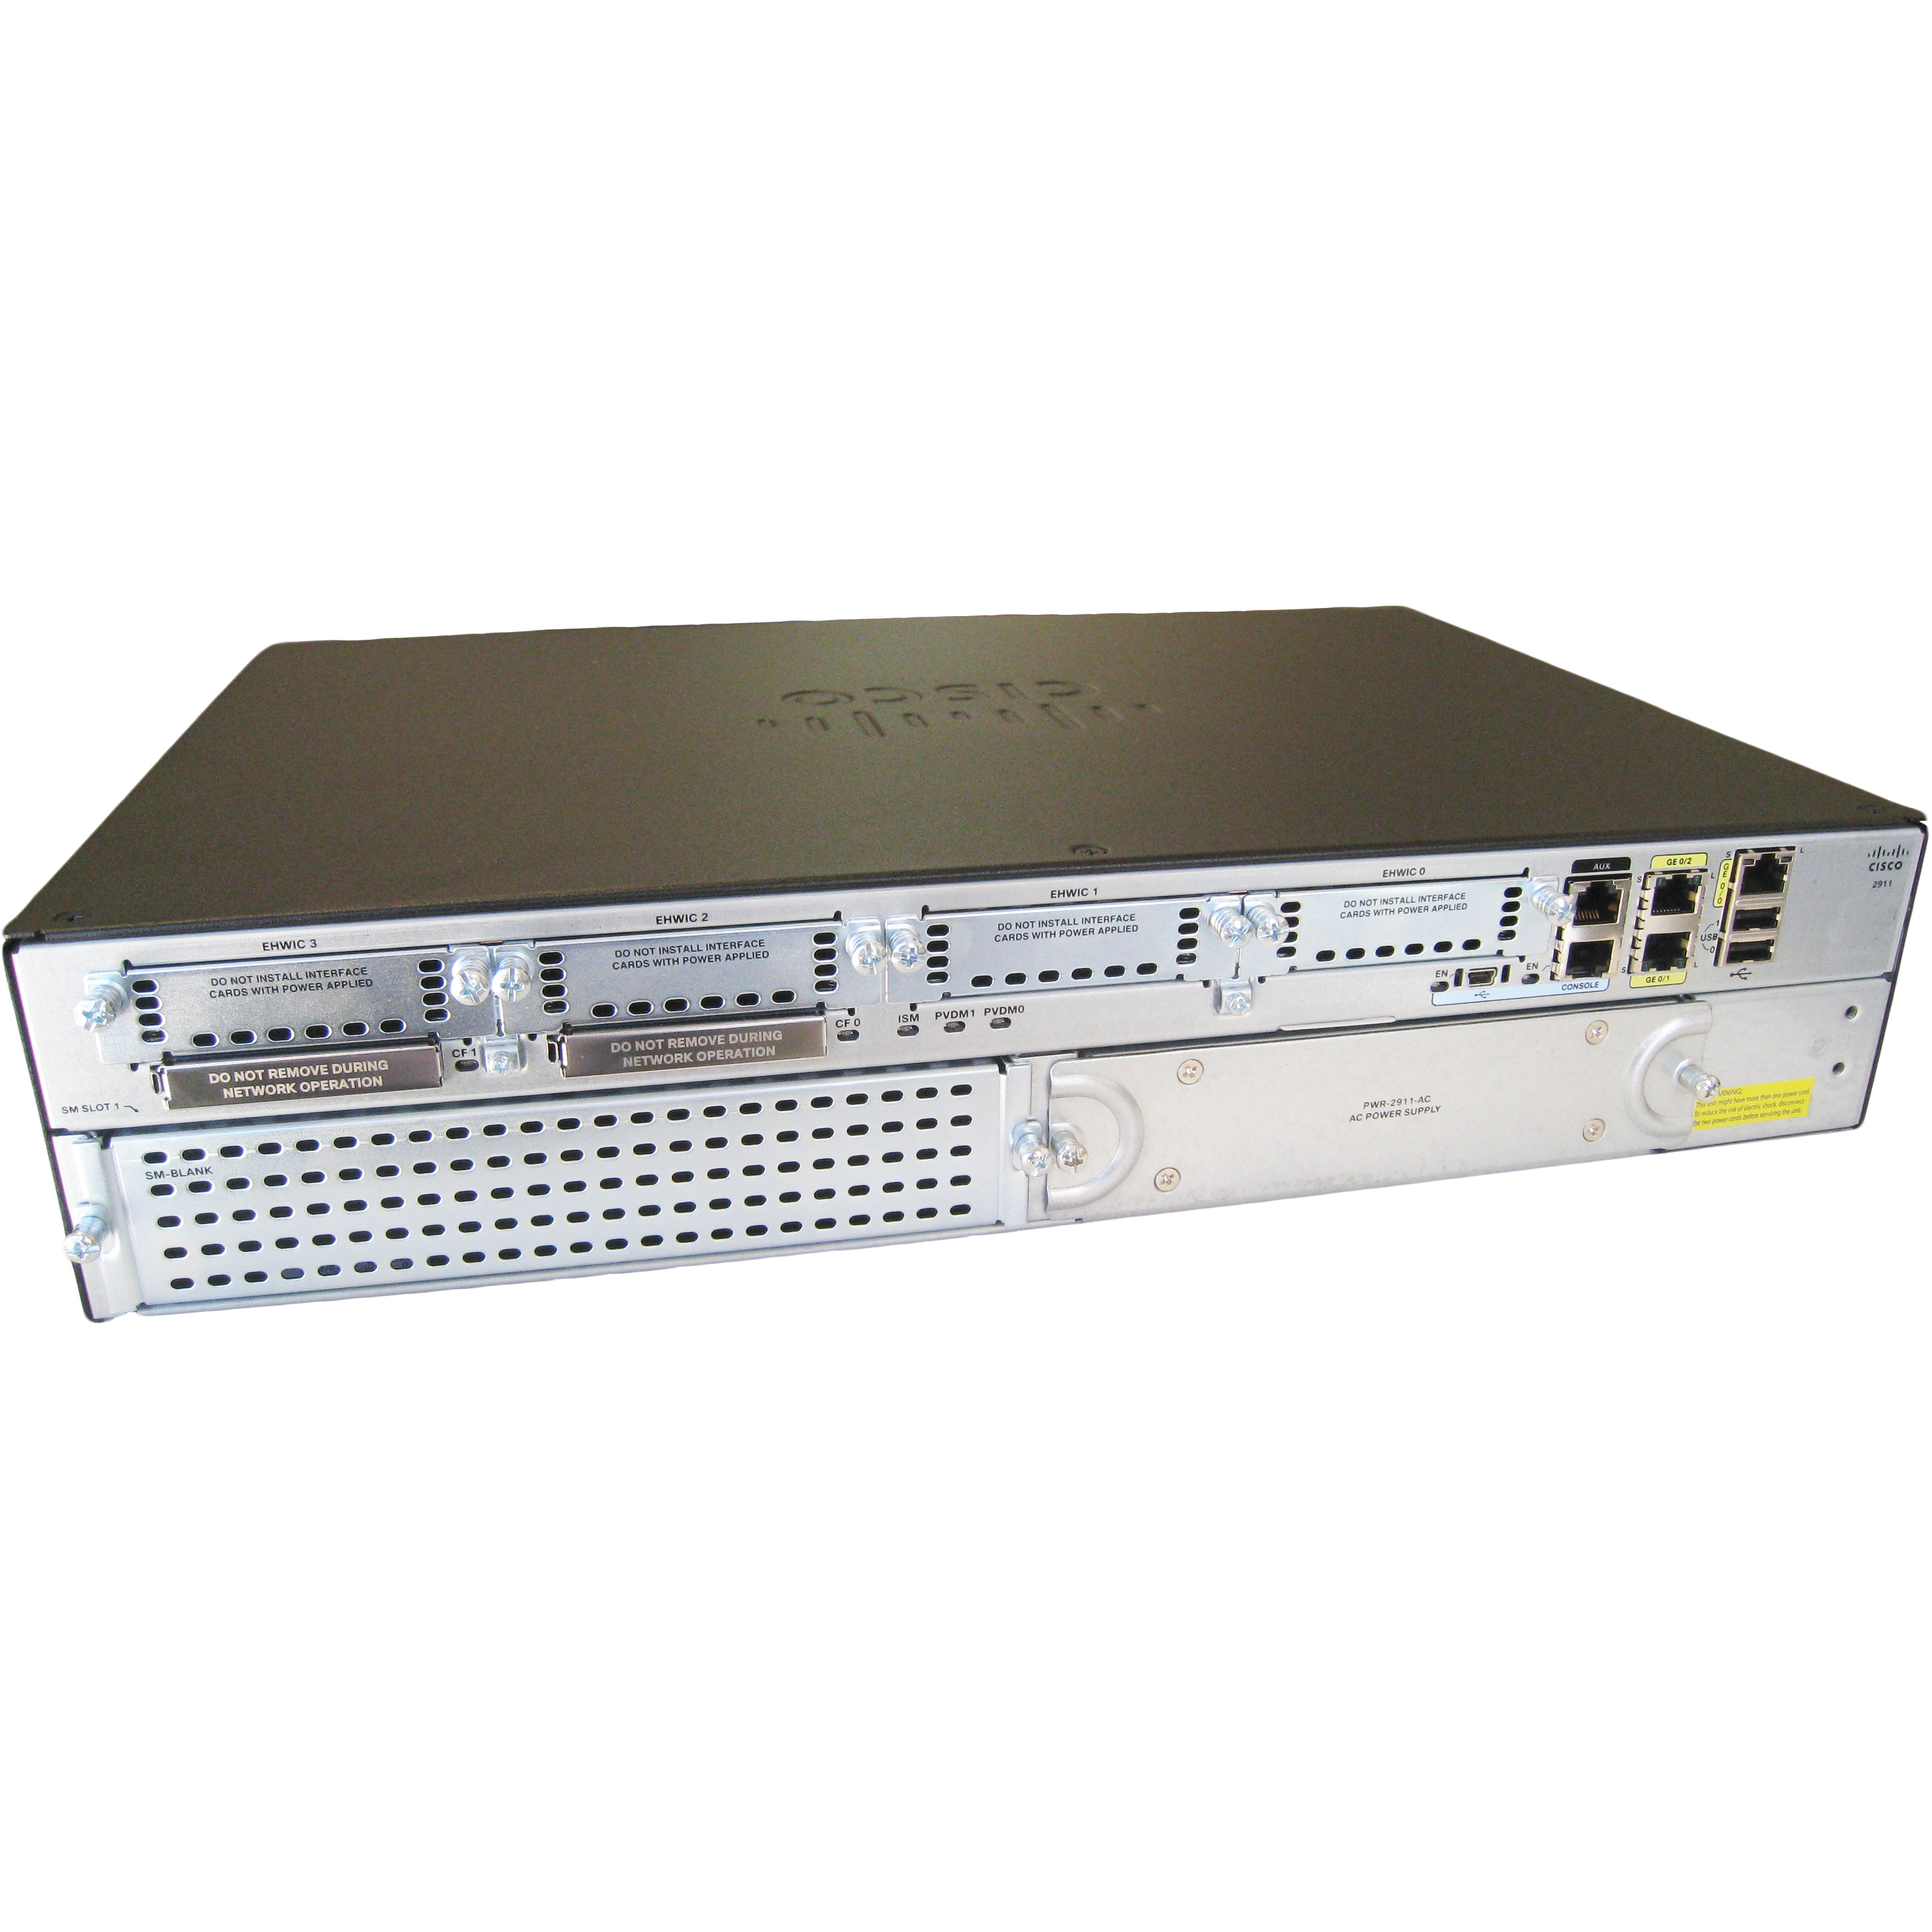 Cisco CISCO2911-HSEC+/K9